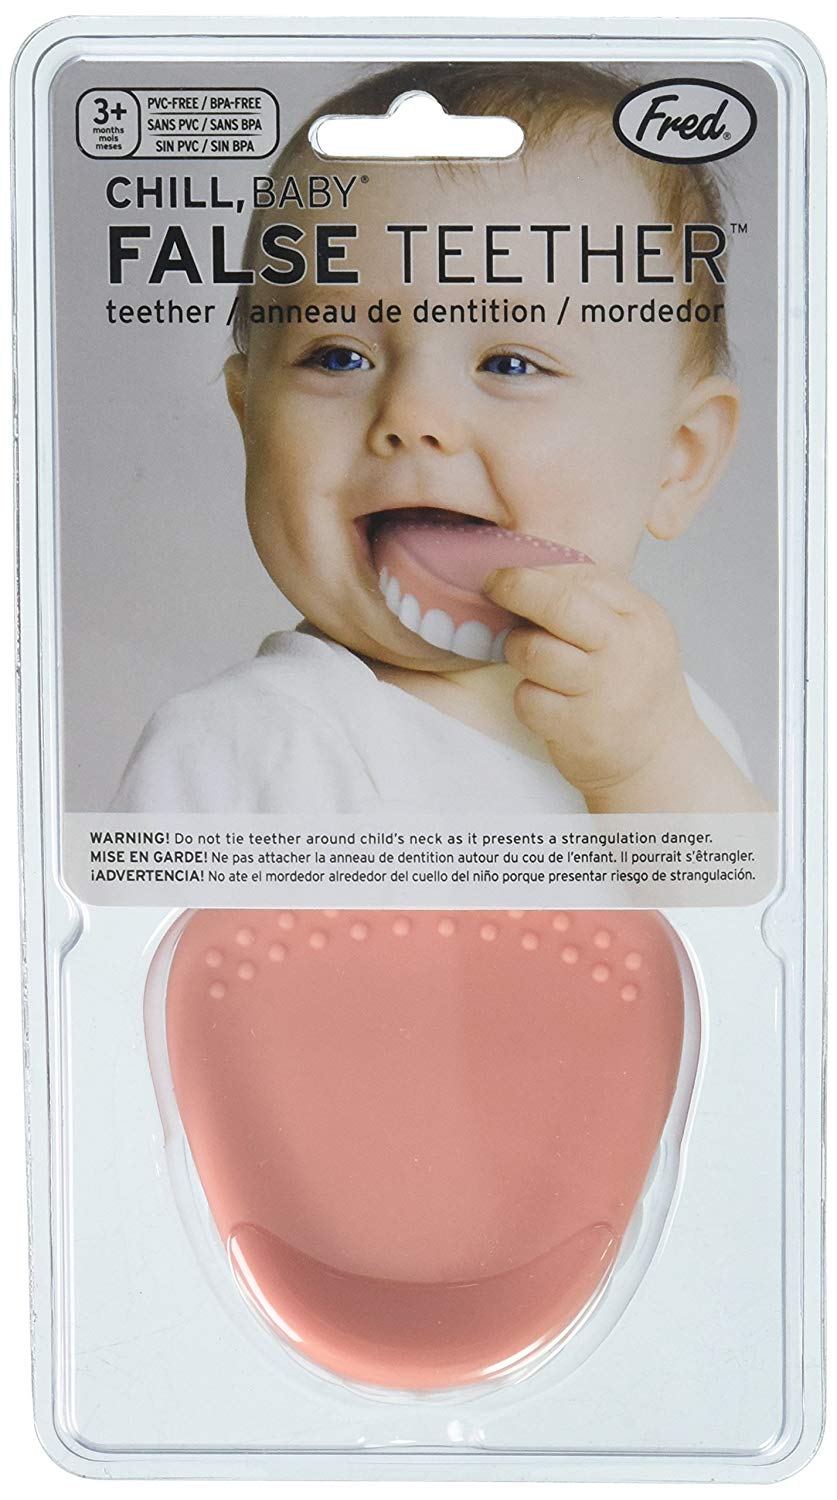 False teeth teething toy